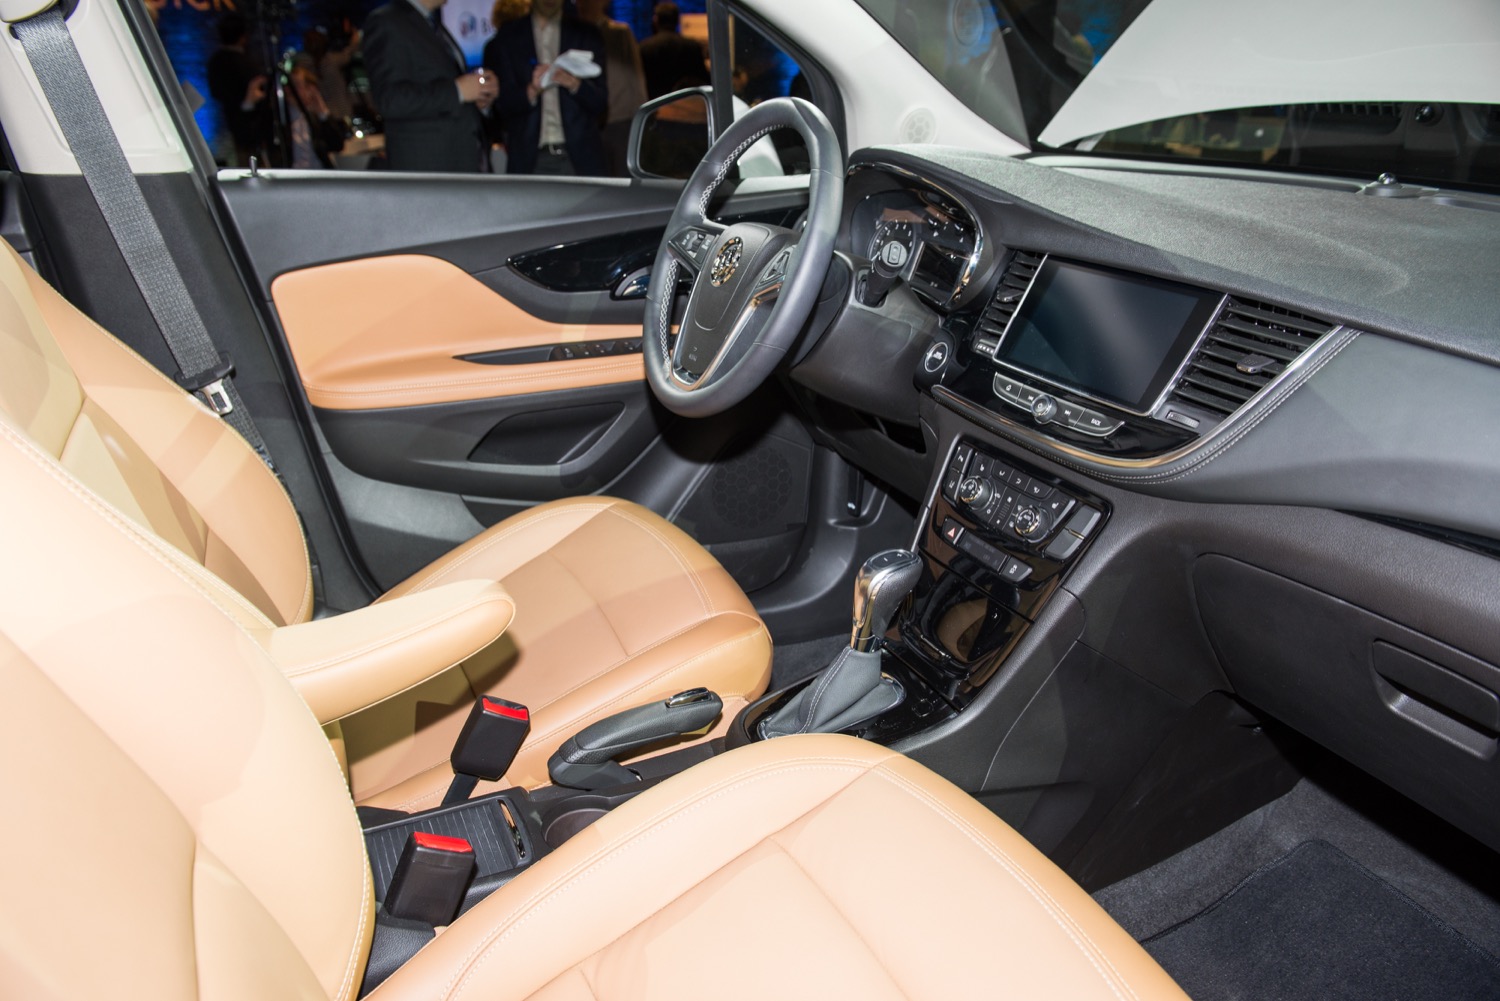 2018 Buick Encore Interior Colors Gm Authority